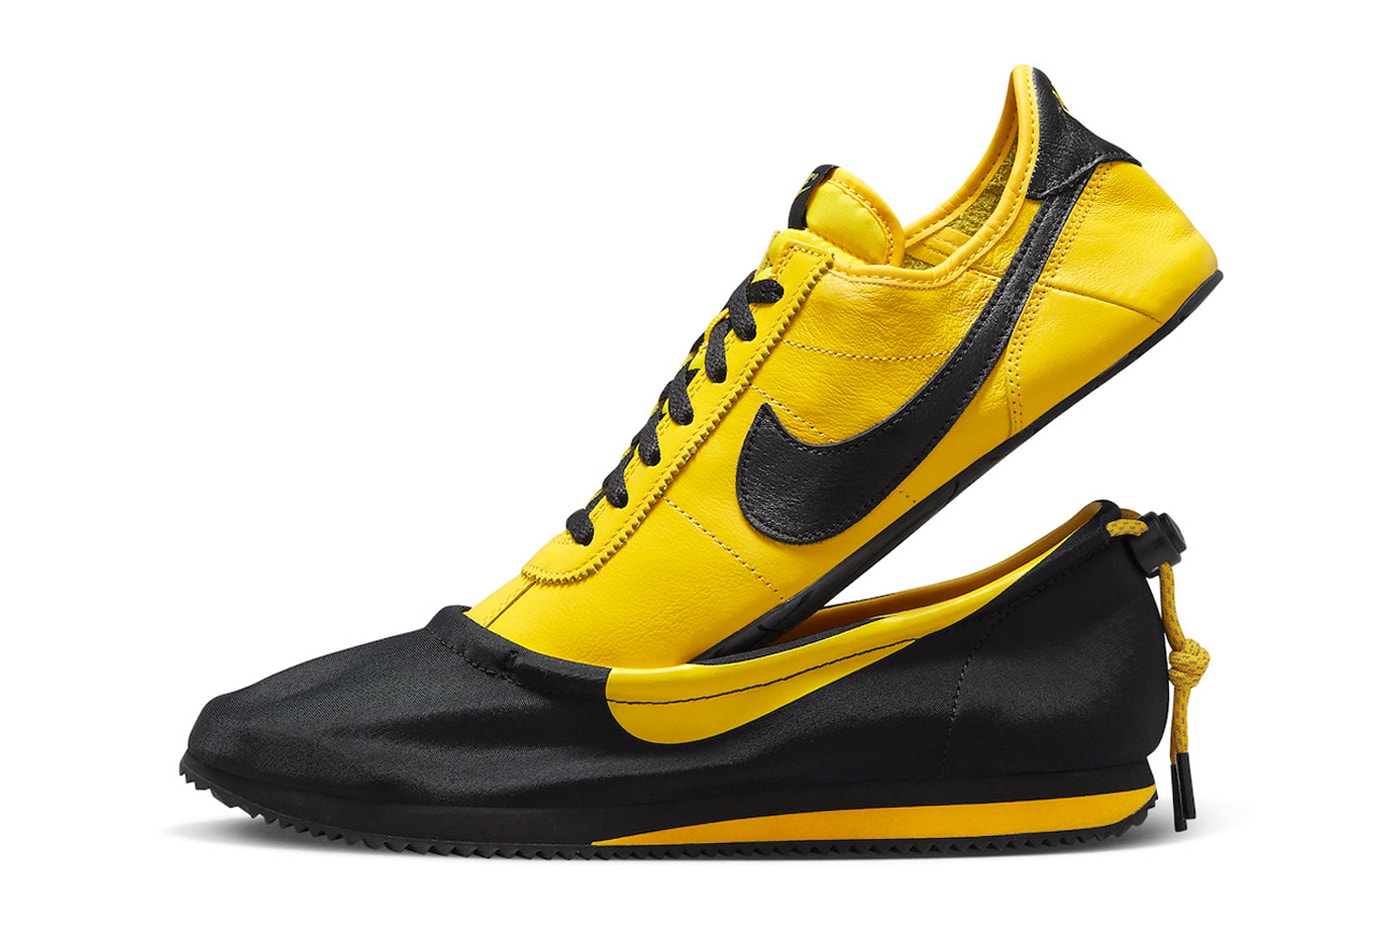 CLOT x Nike 人氣聯名系列「CLOTEZ」最新配色「Bruce Lee」官方圖輯率先公開